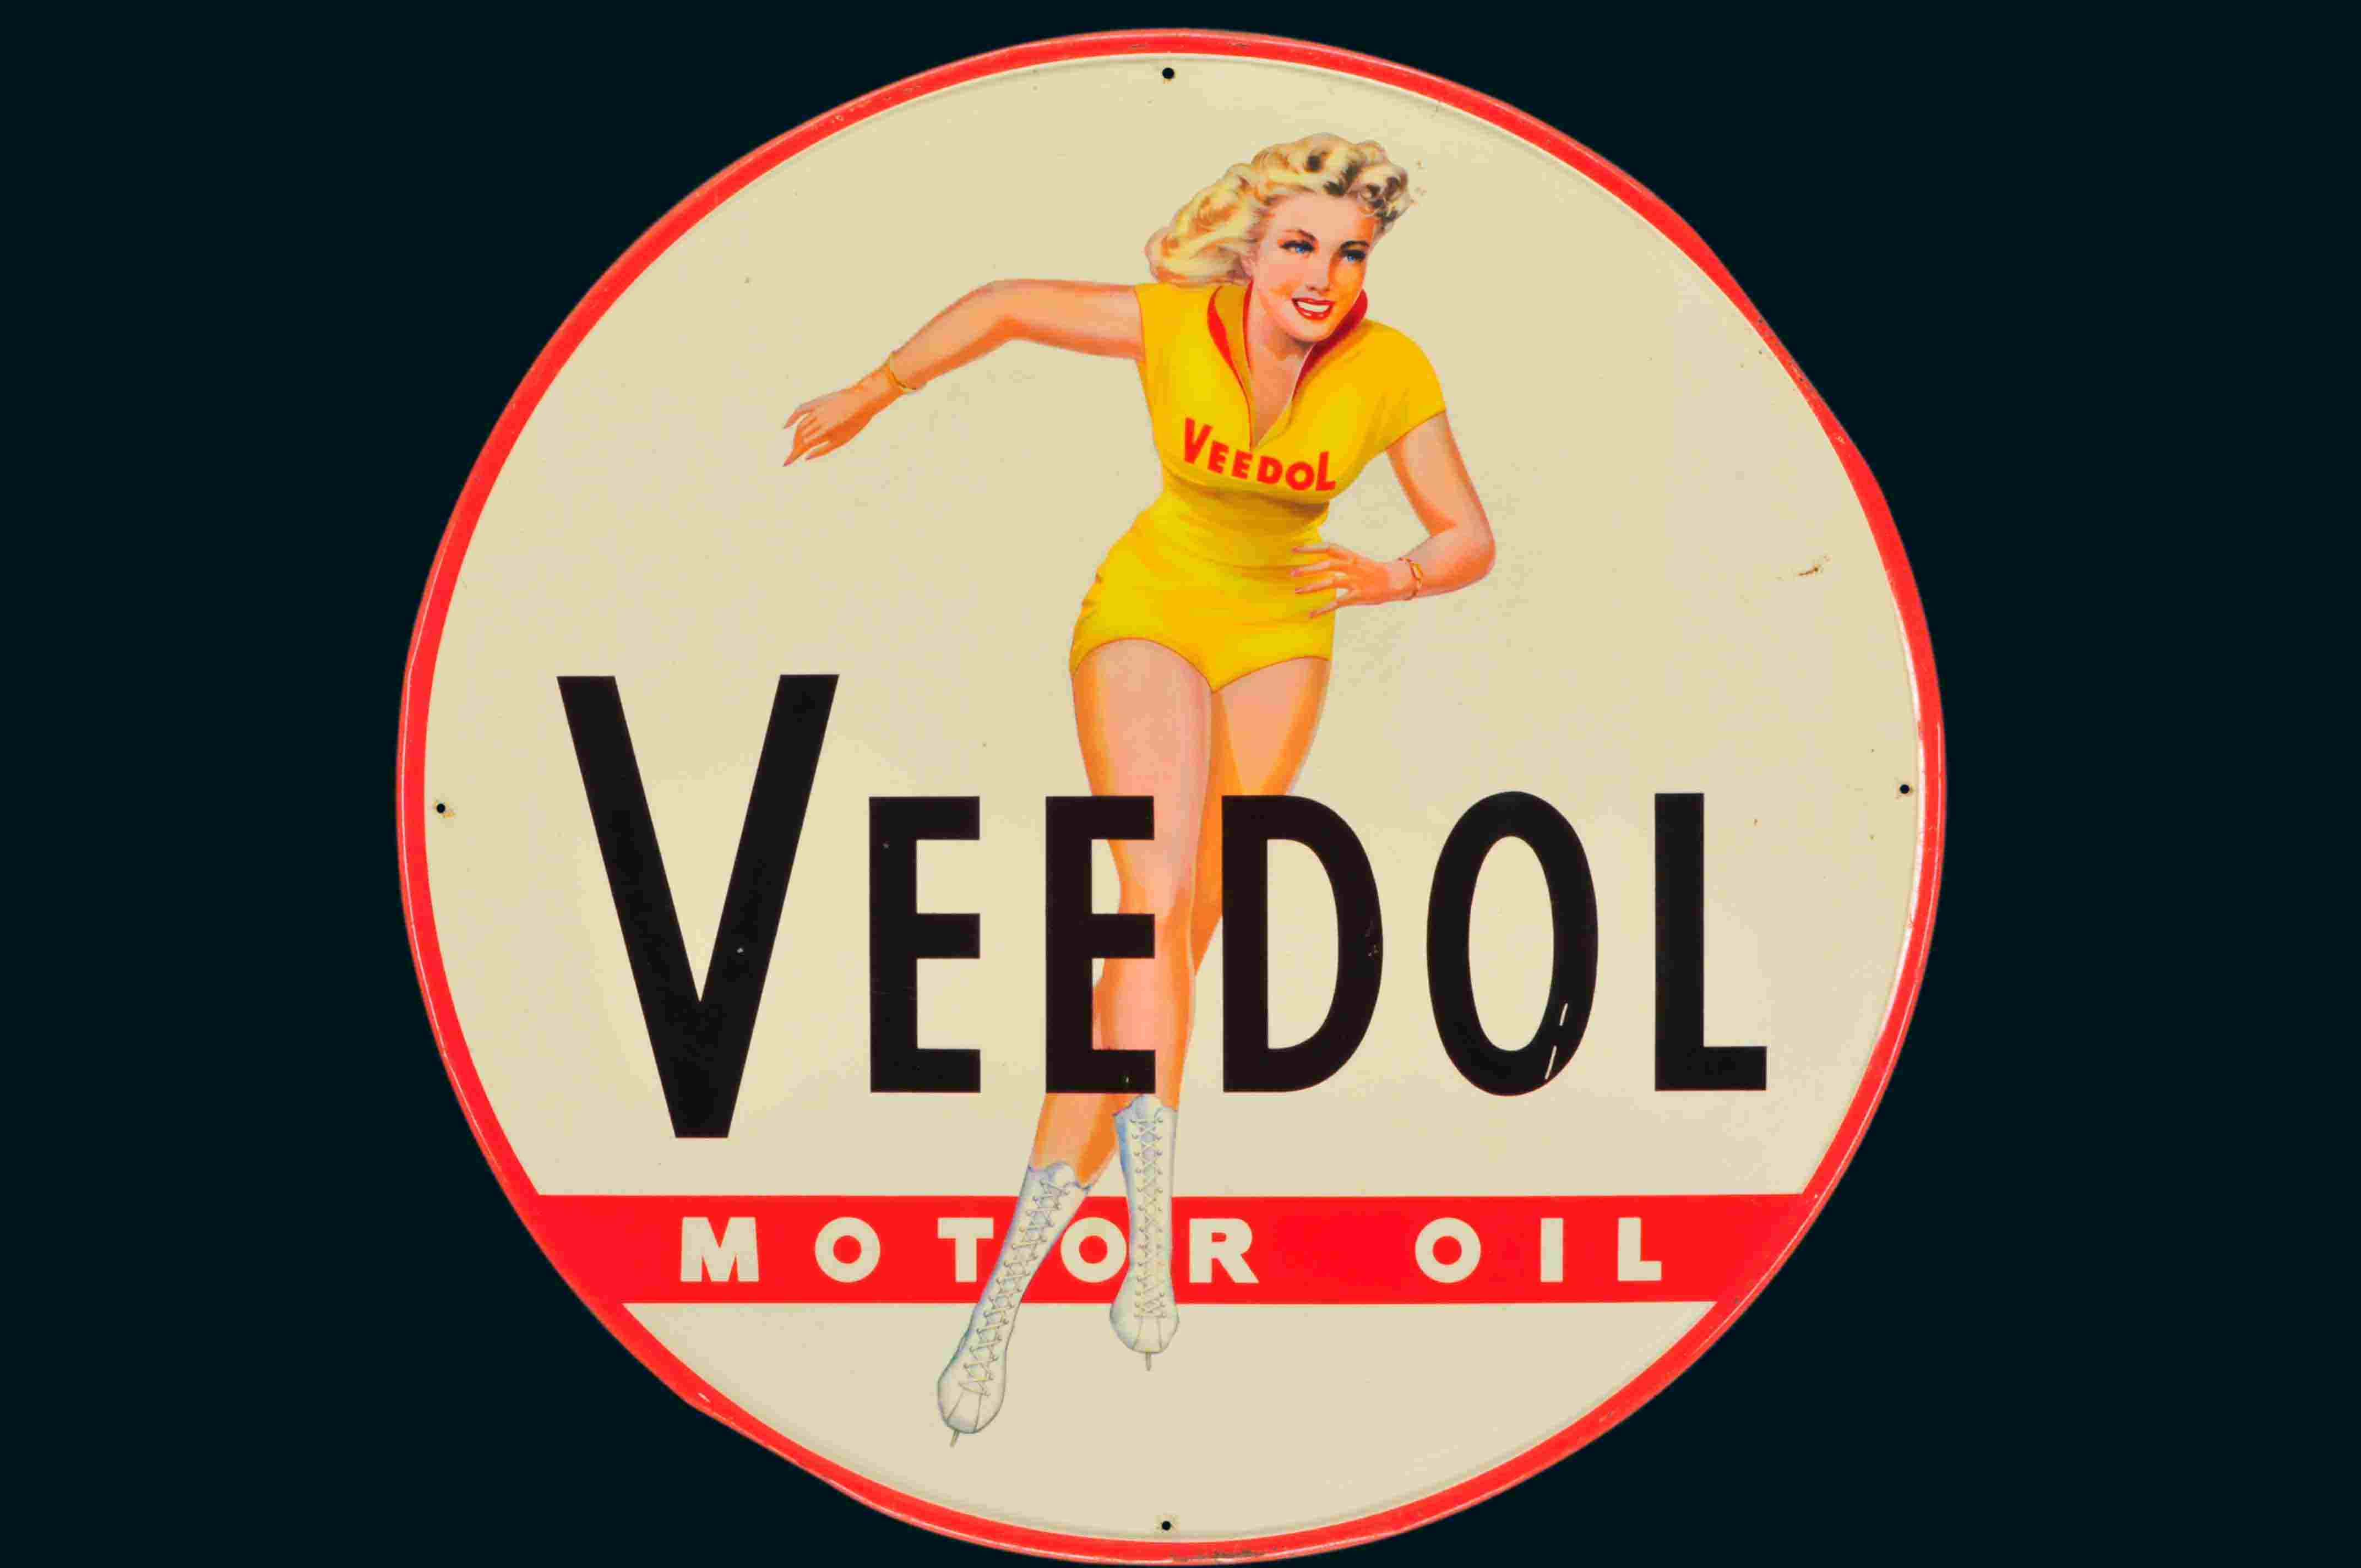 Veedol Motor Oil 